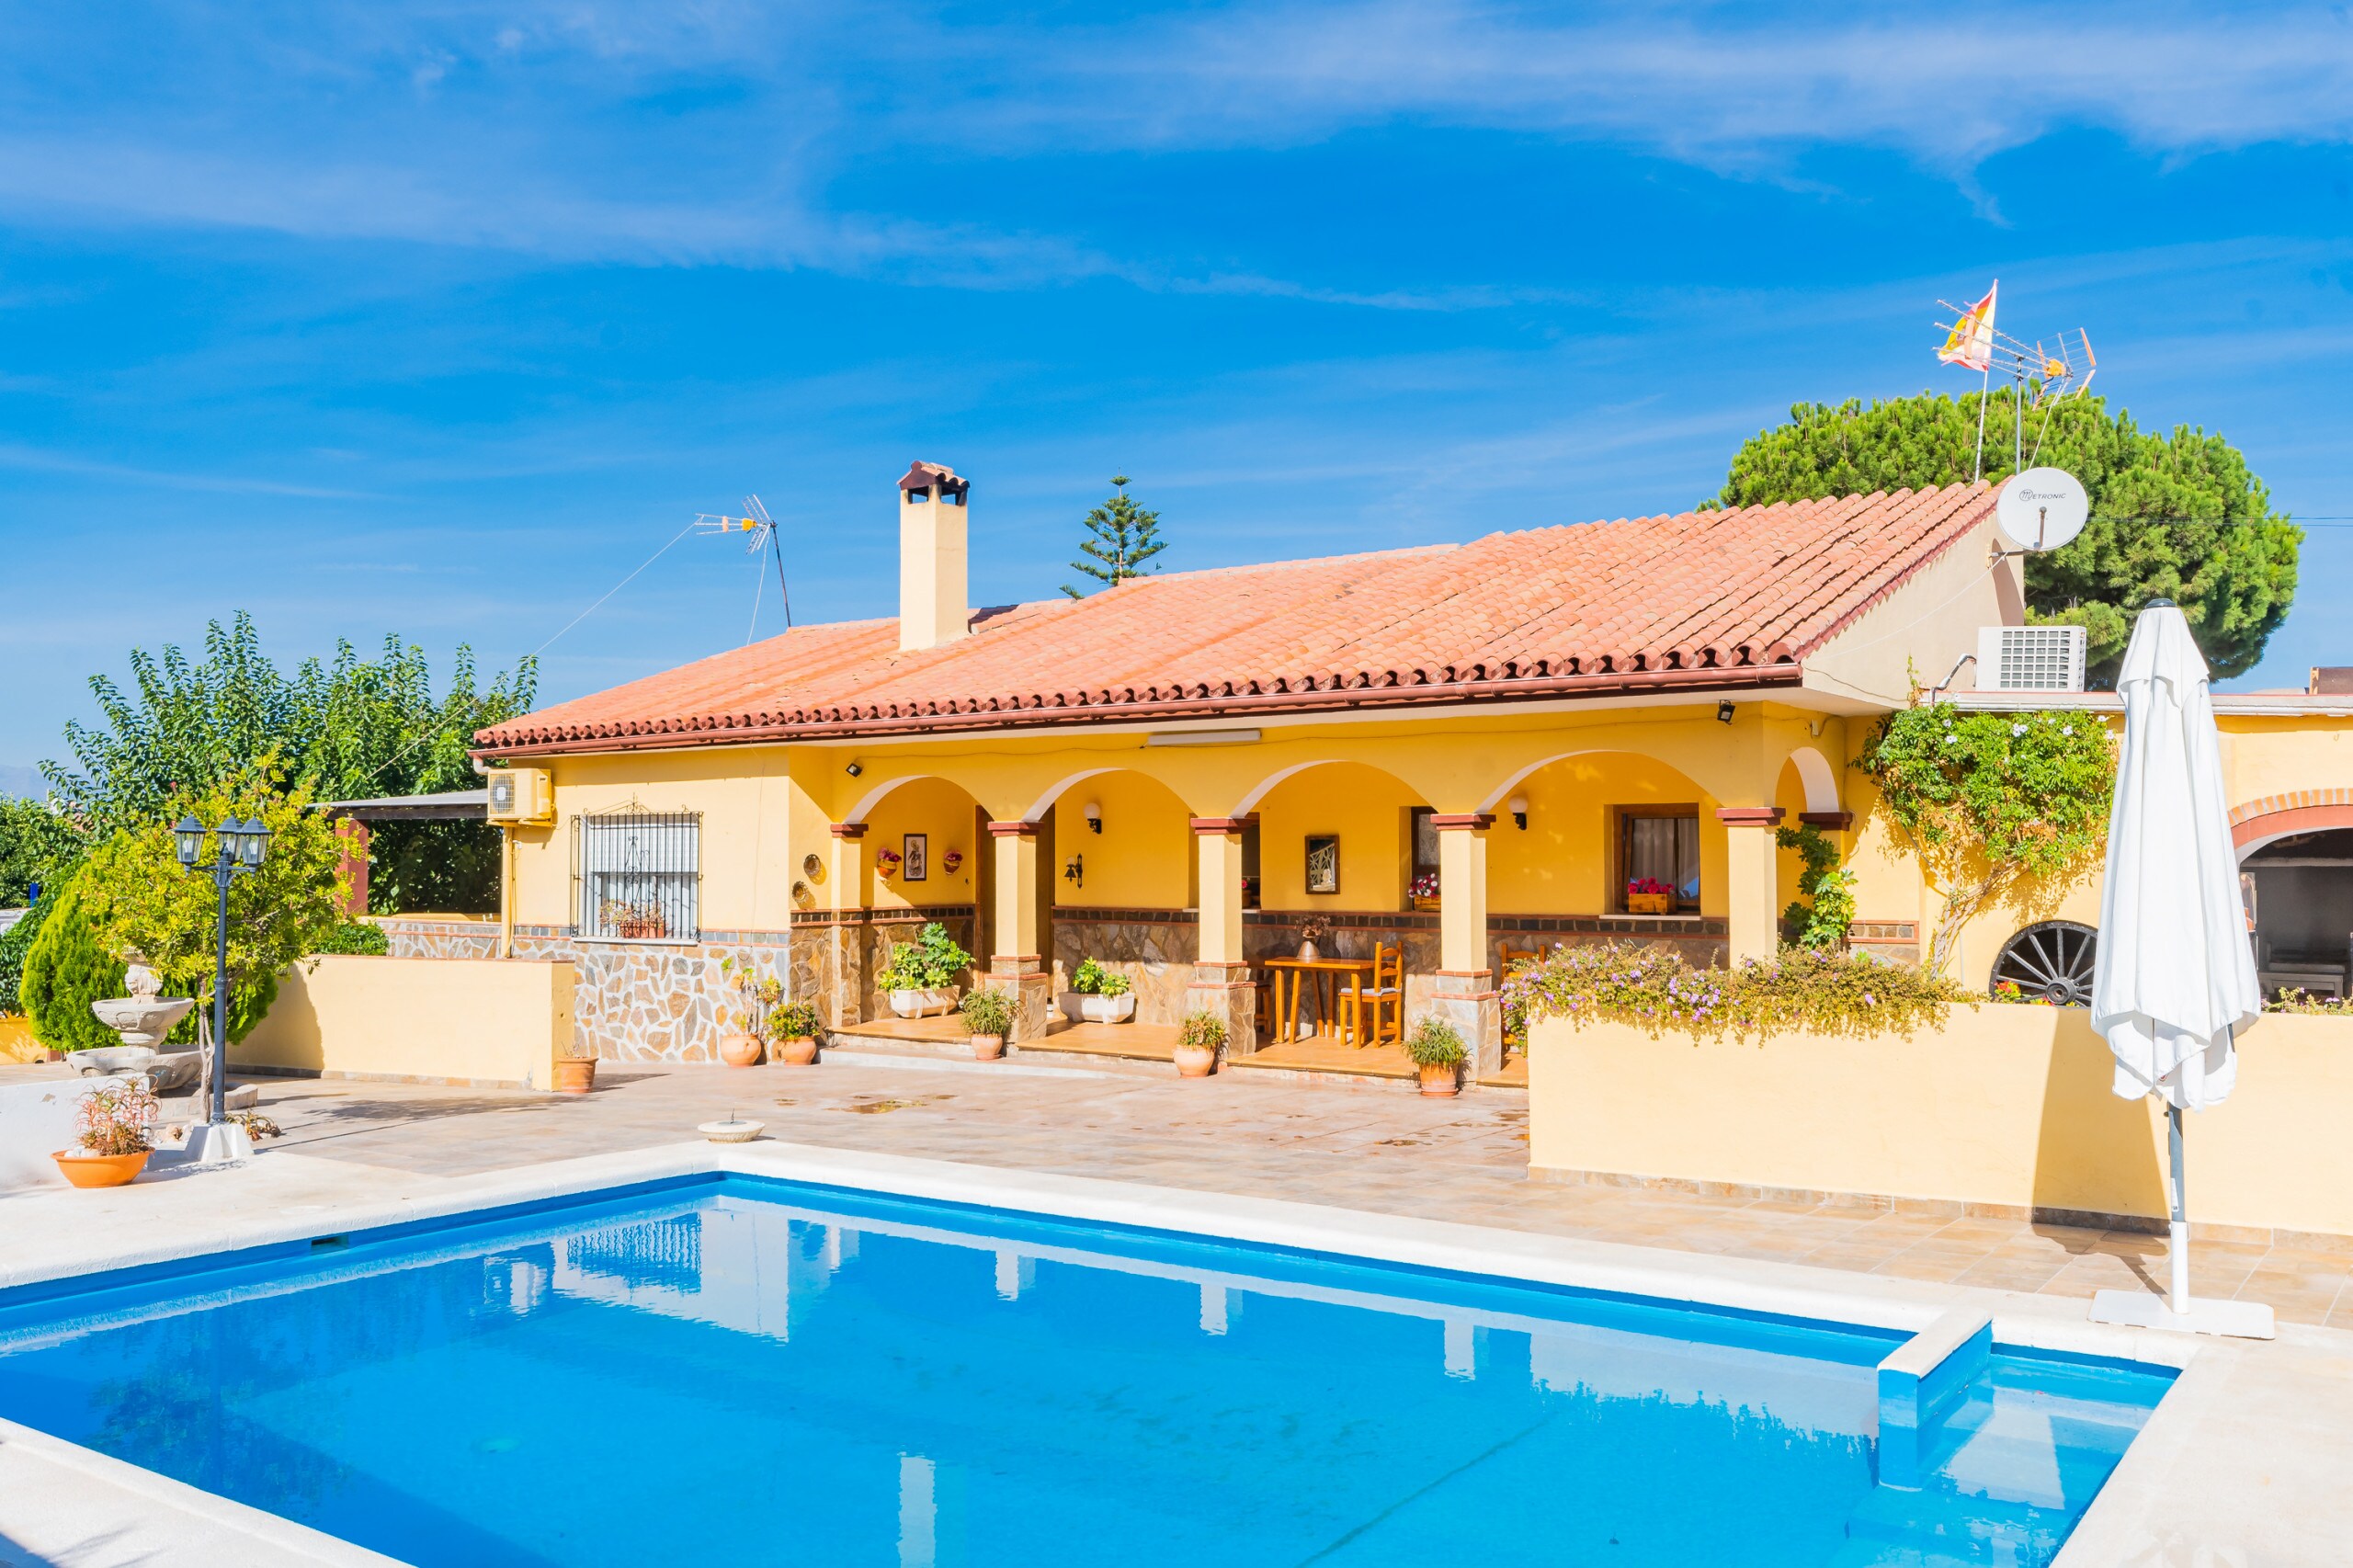 Enjoy the private pool of this Finca in Alhaurín de la Torre